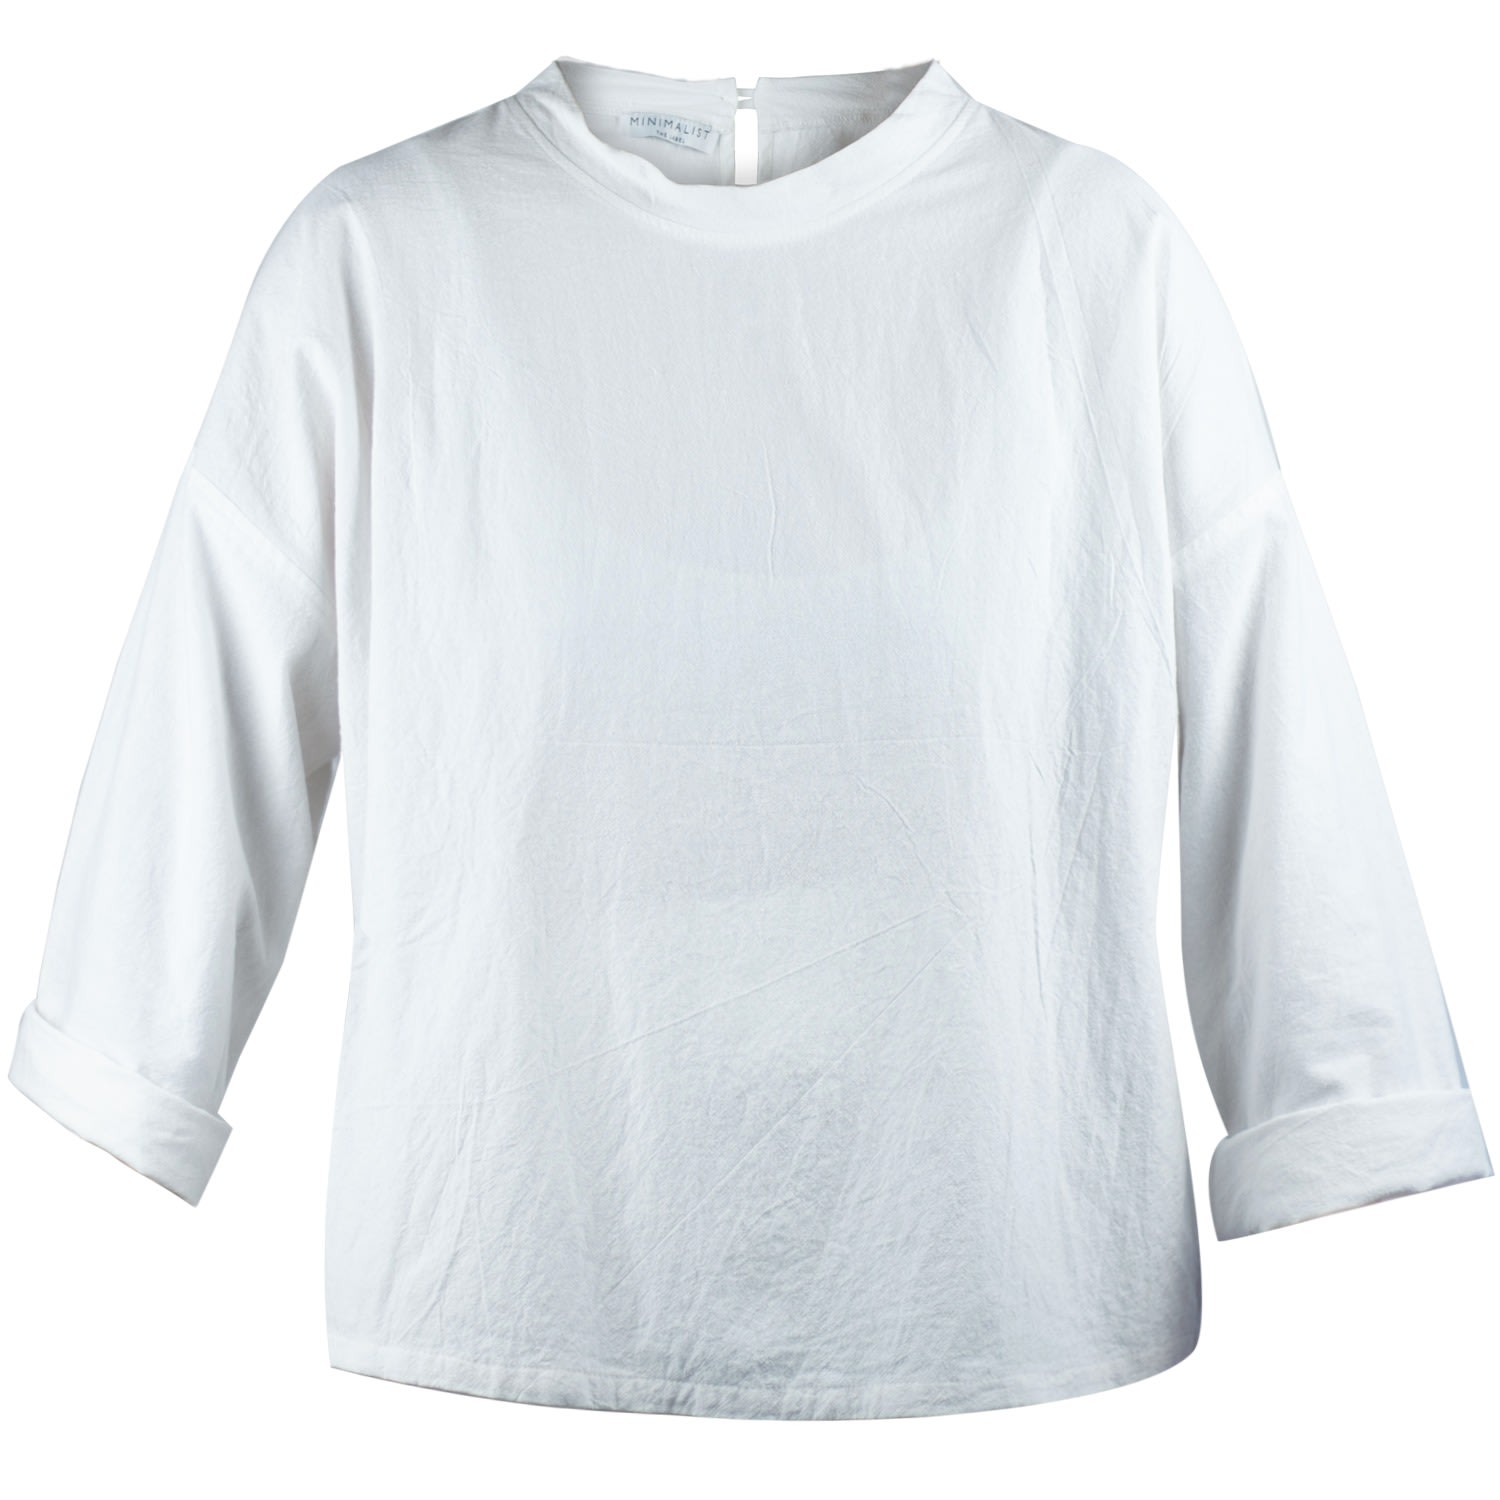 Women’s Arley Sweatshirt - White Small Minimalist the Label